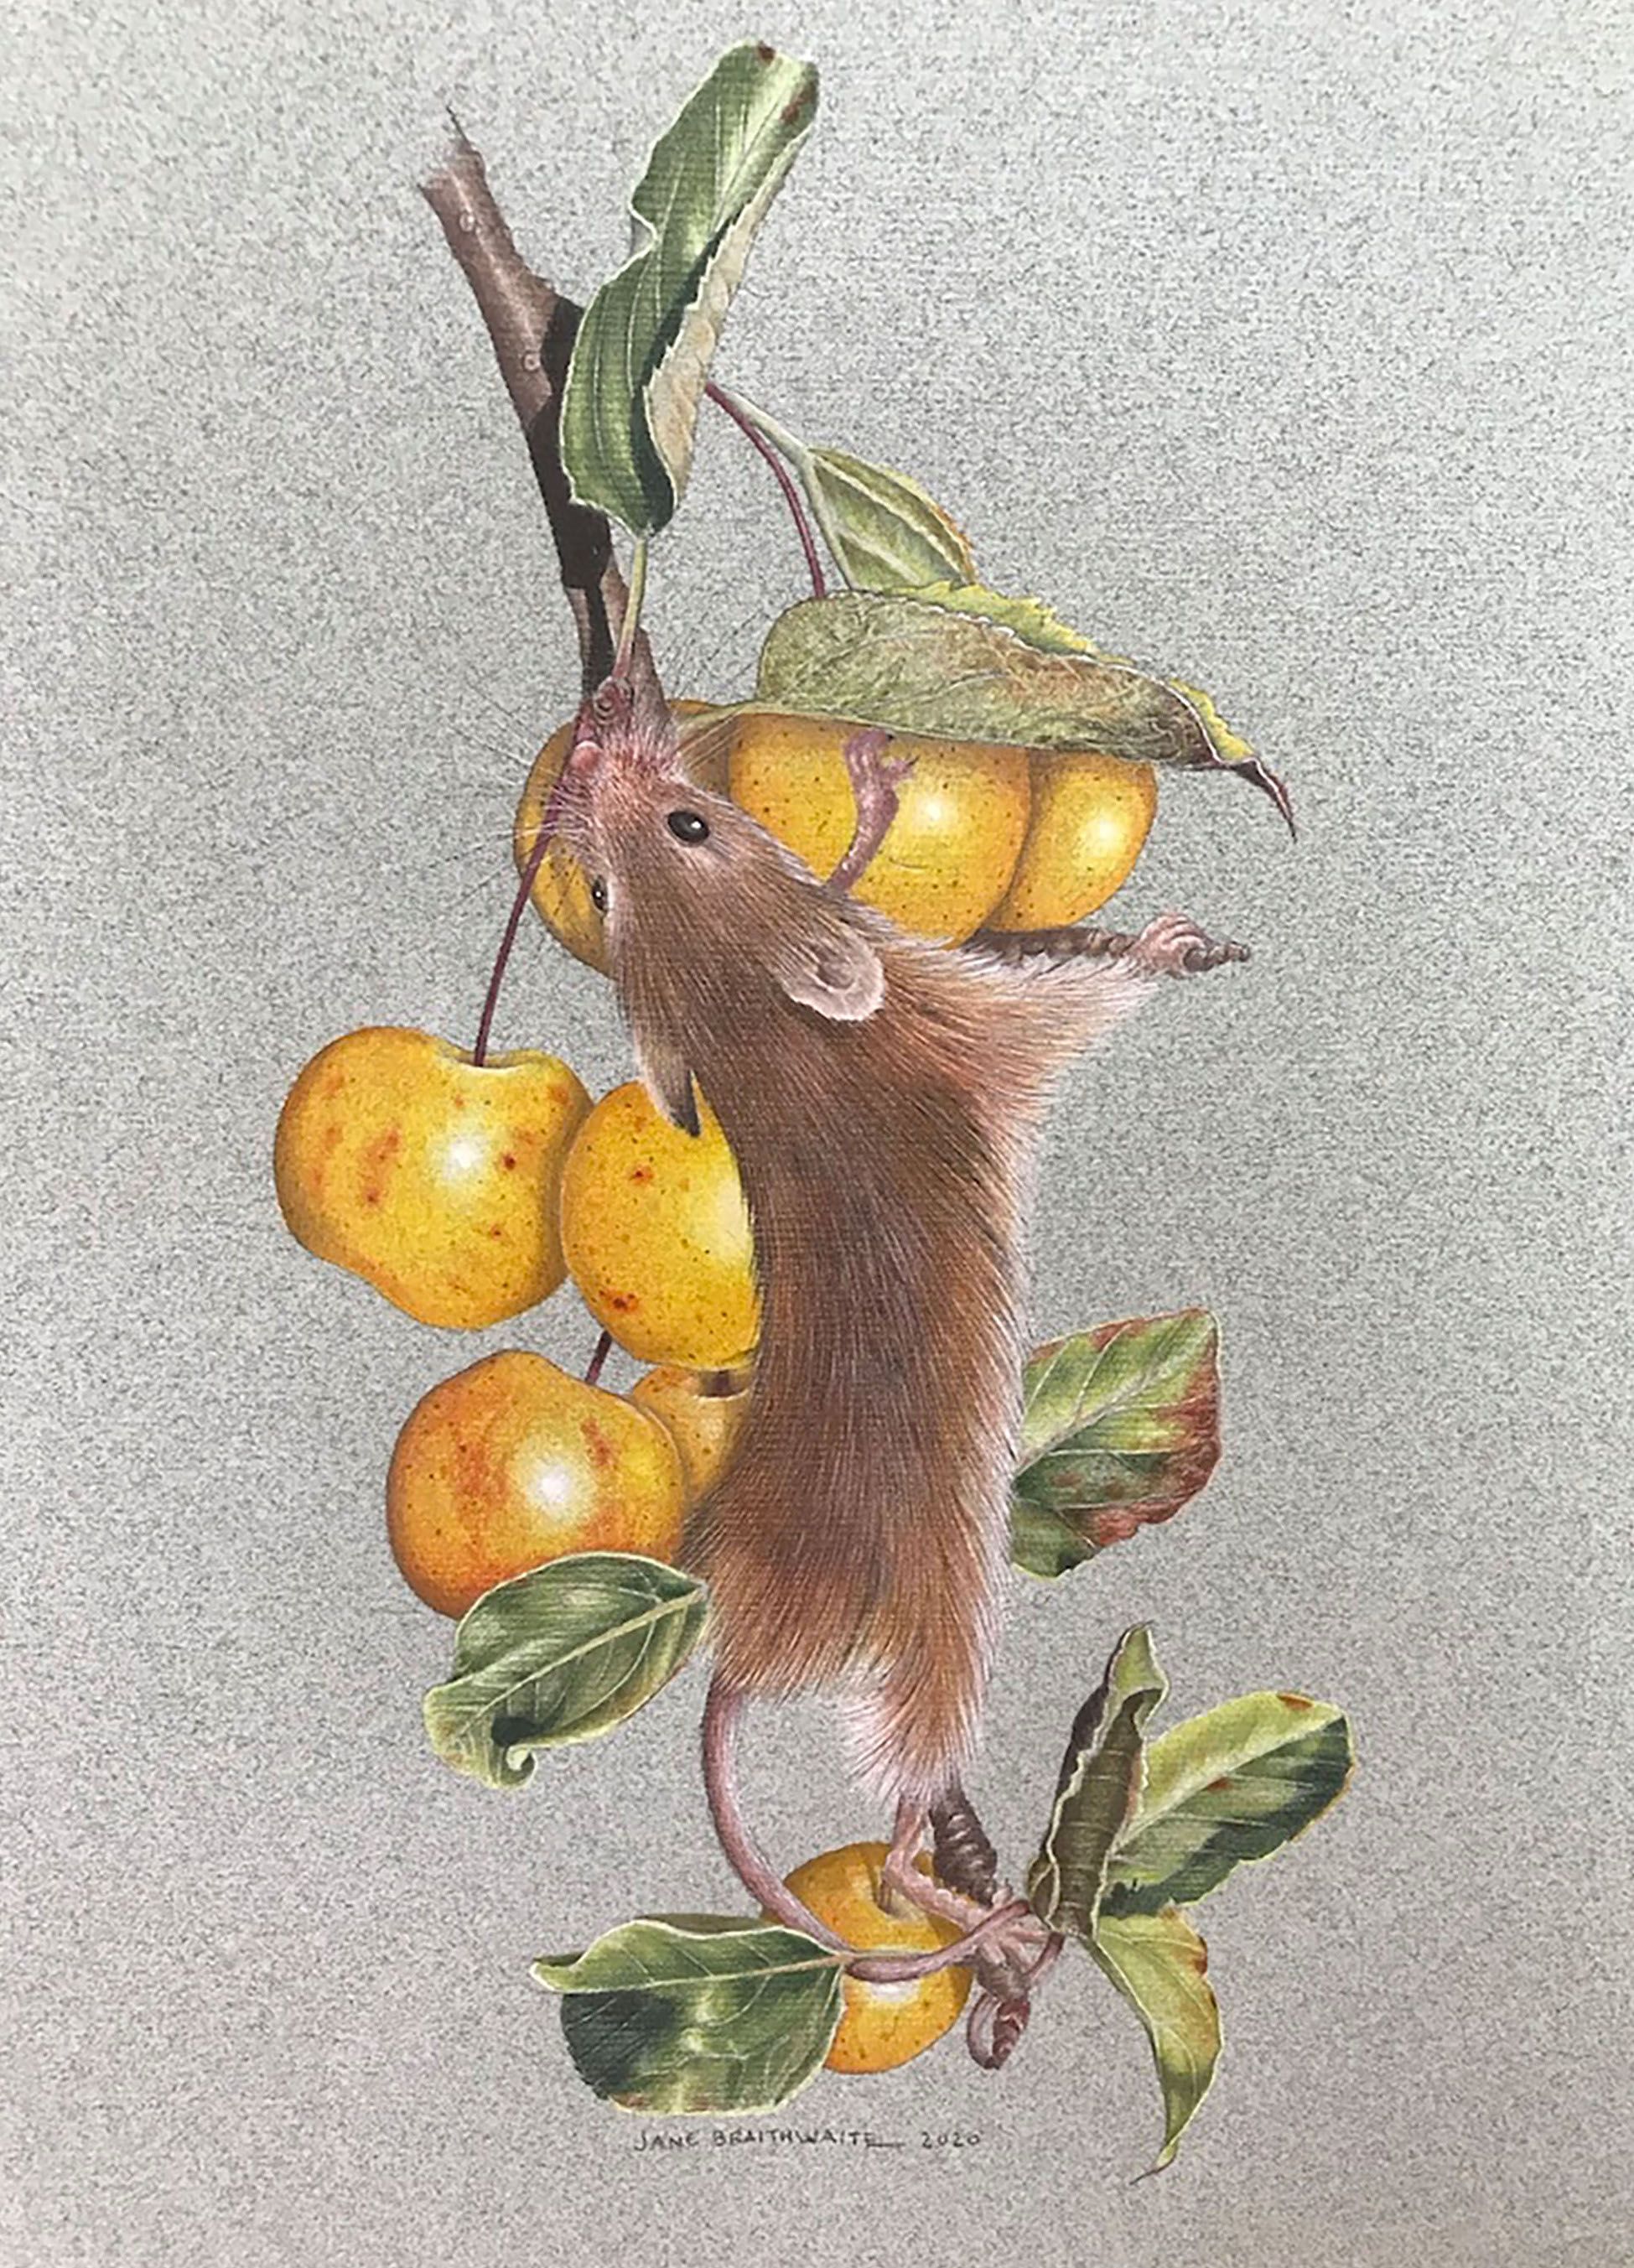 Harvest mouse on Crabapple